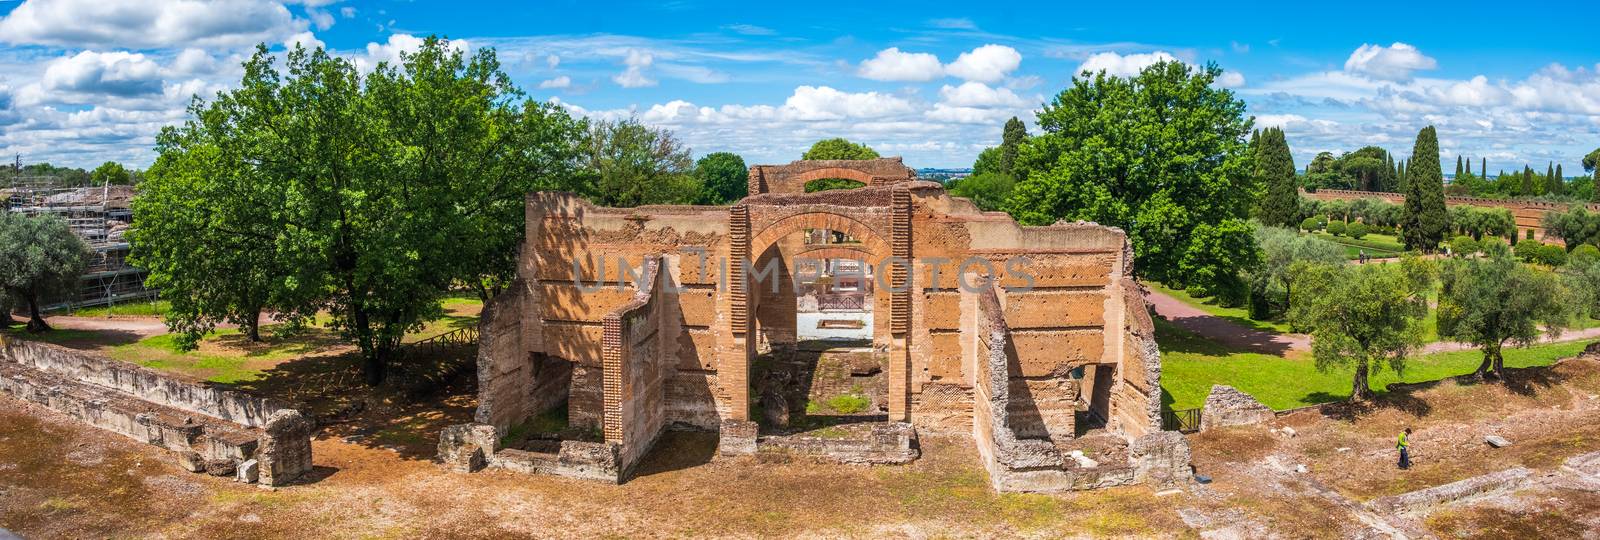 Tivoli - Villa Adriana cultural Rome tour- archaeological landmark in Italy panoramic horizontal of Three Exedras building .